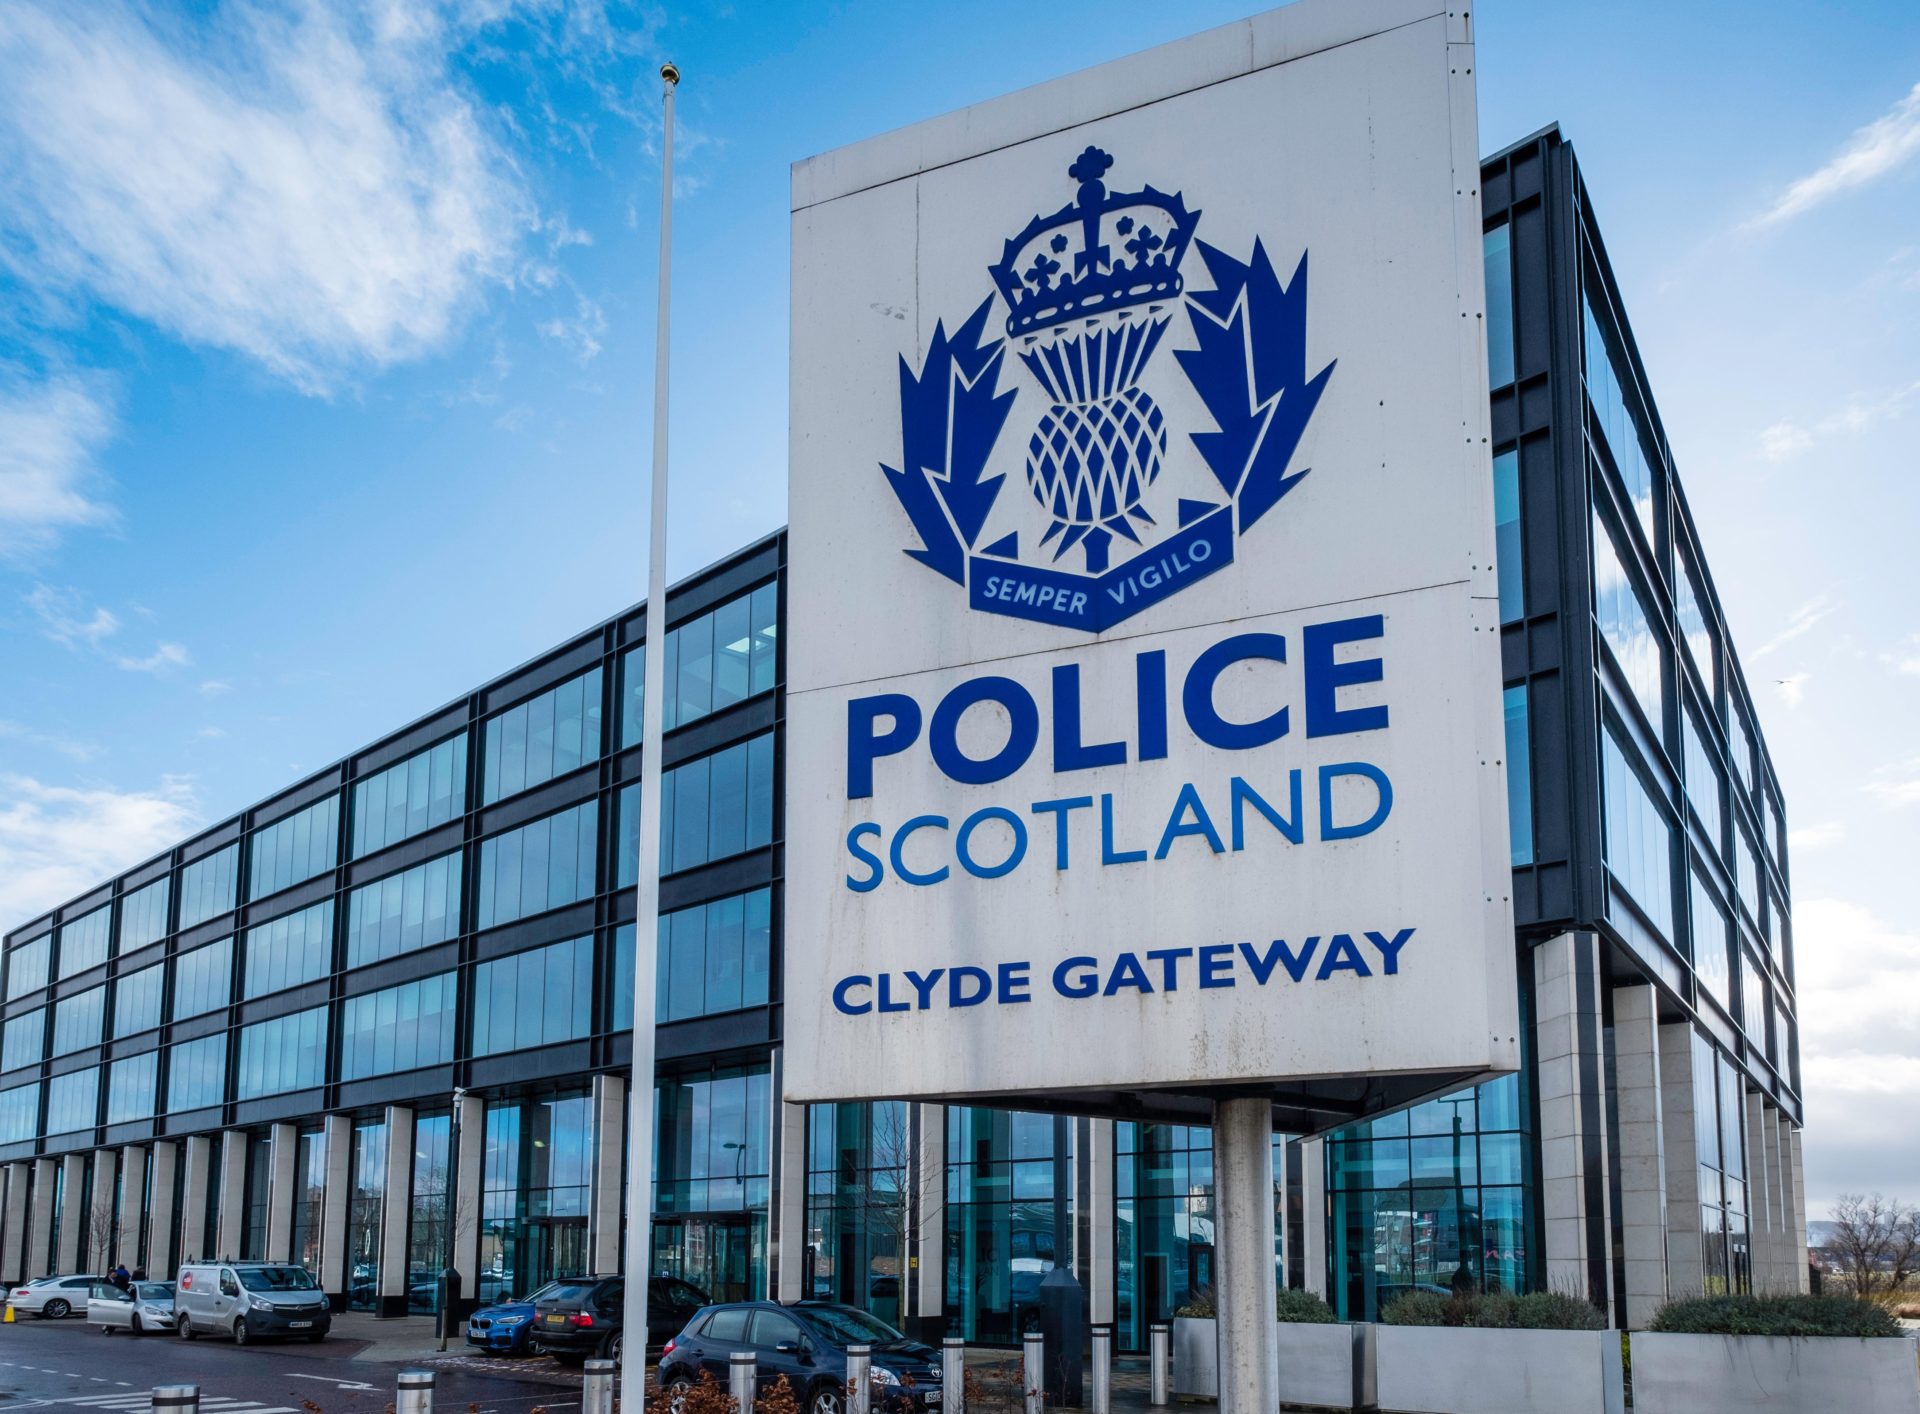 Police Scotland headquarters in Glasgow, Scotland in February 2018.